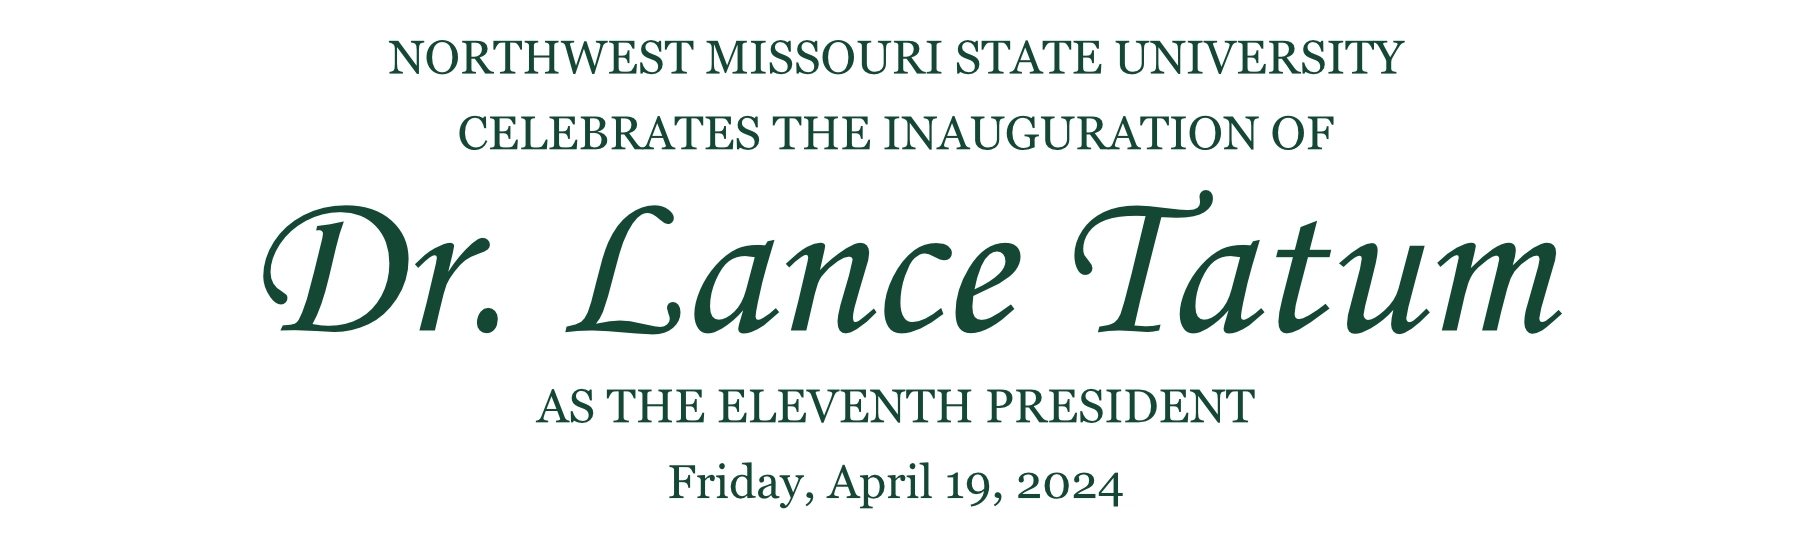 Northwest Missouri State University celebrates the inauguration of Dr. Lance Tatum as the eleventh president on Friday, April 19, 2024